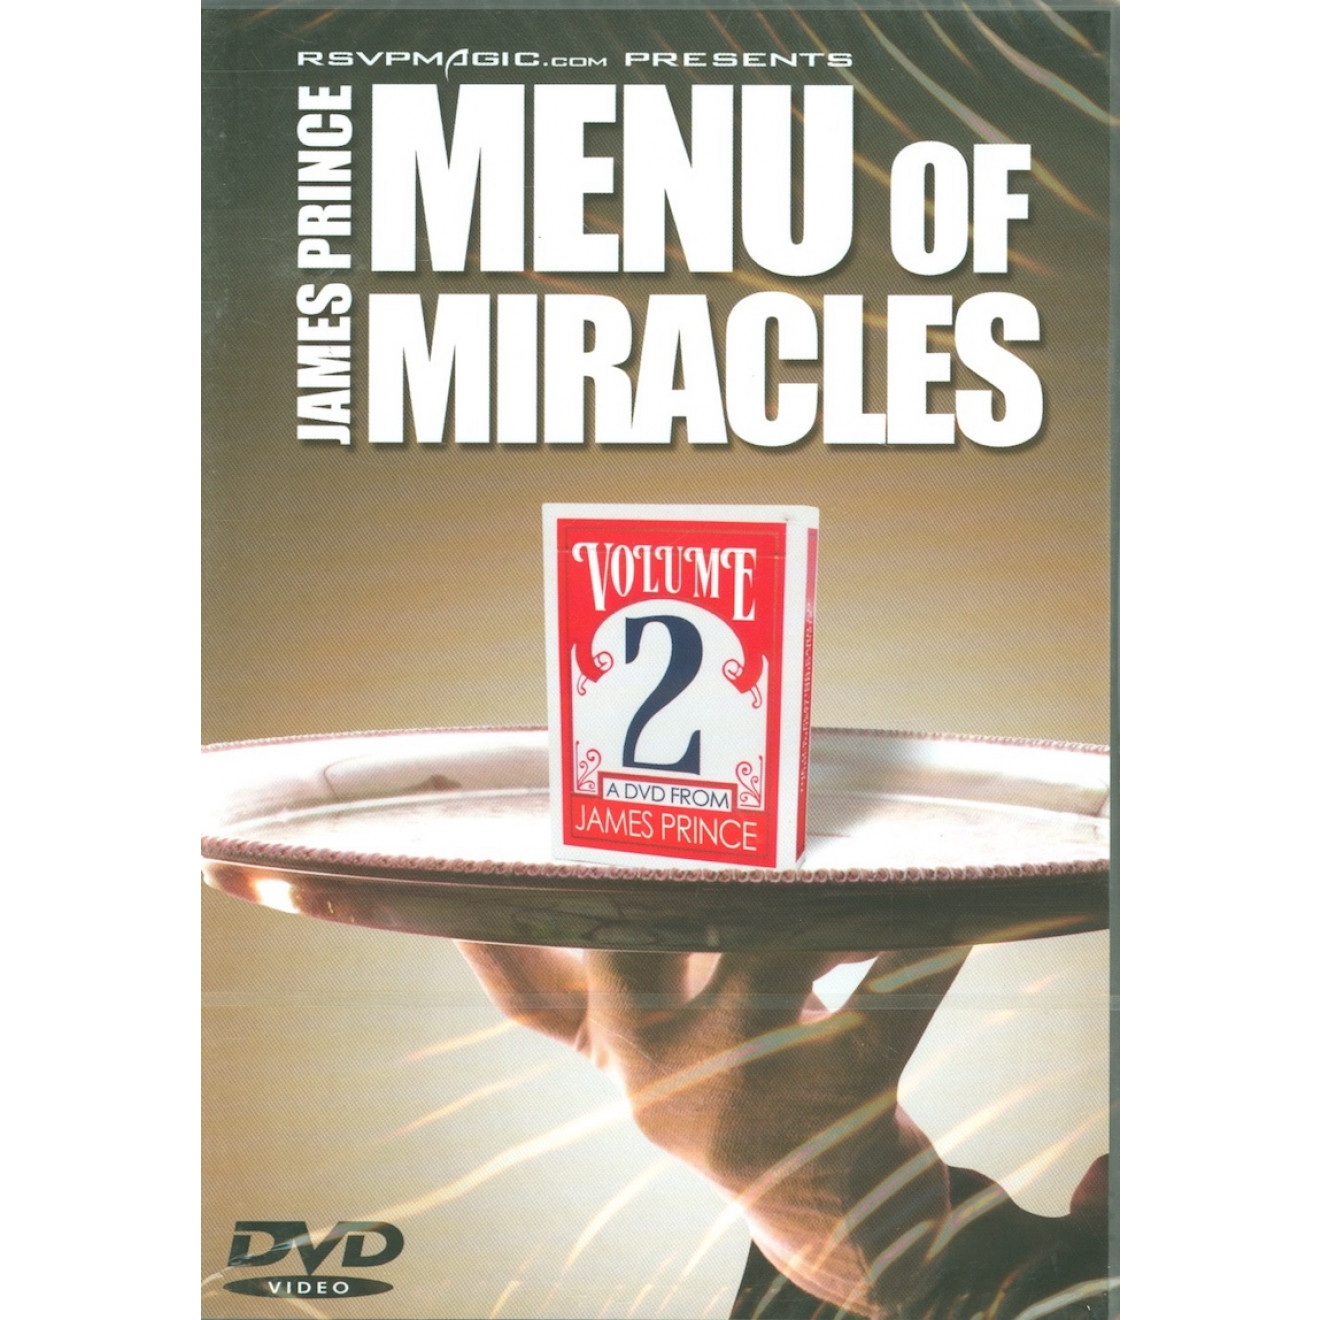 Menu of Miracles Vol. 2 by James Prince & RSVP - DVD